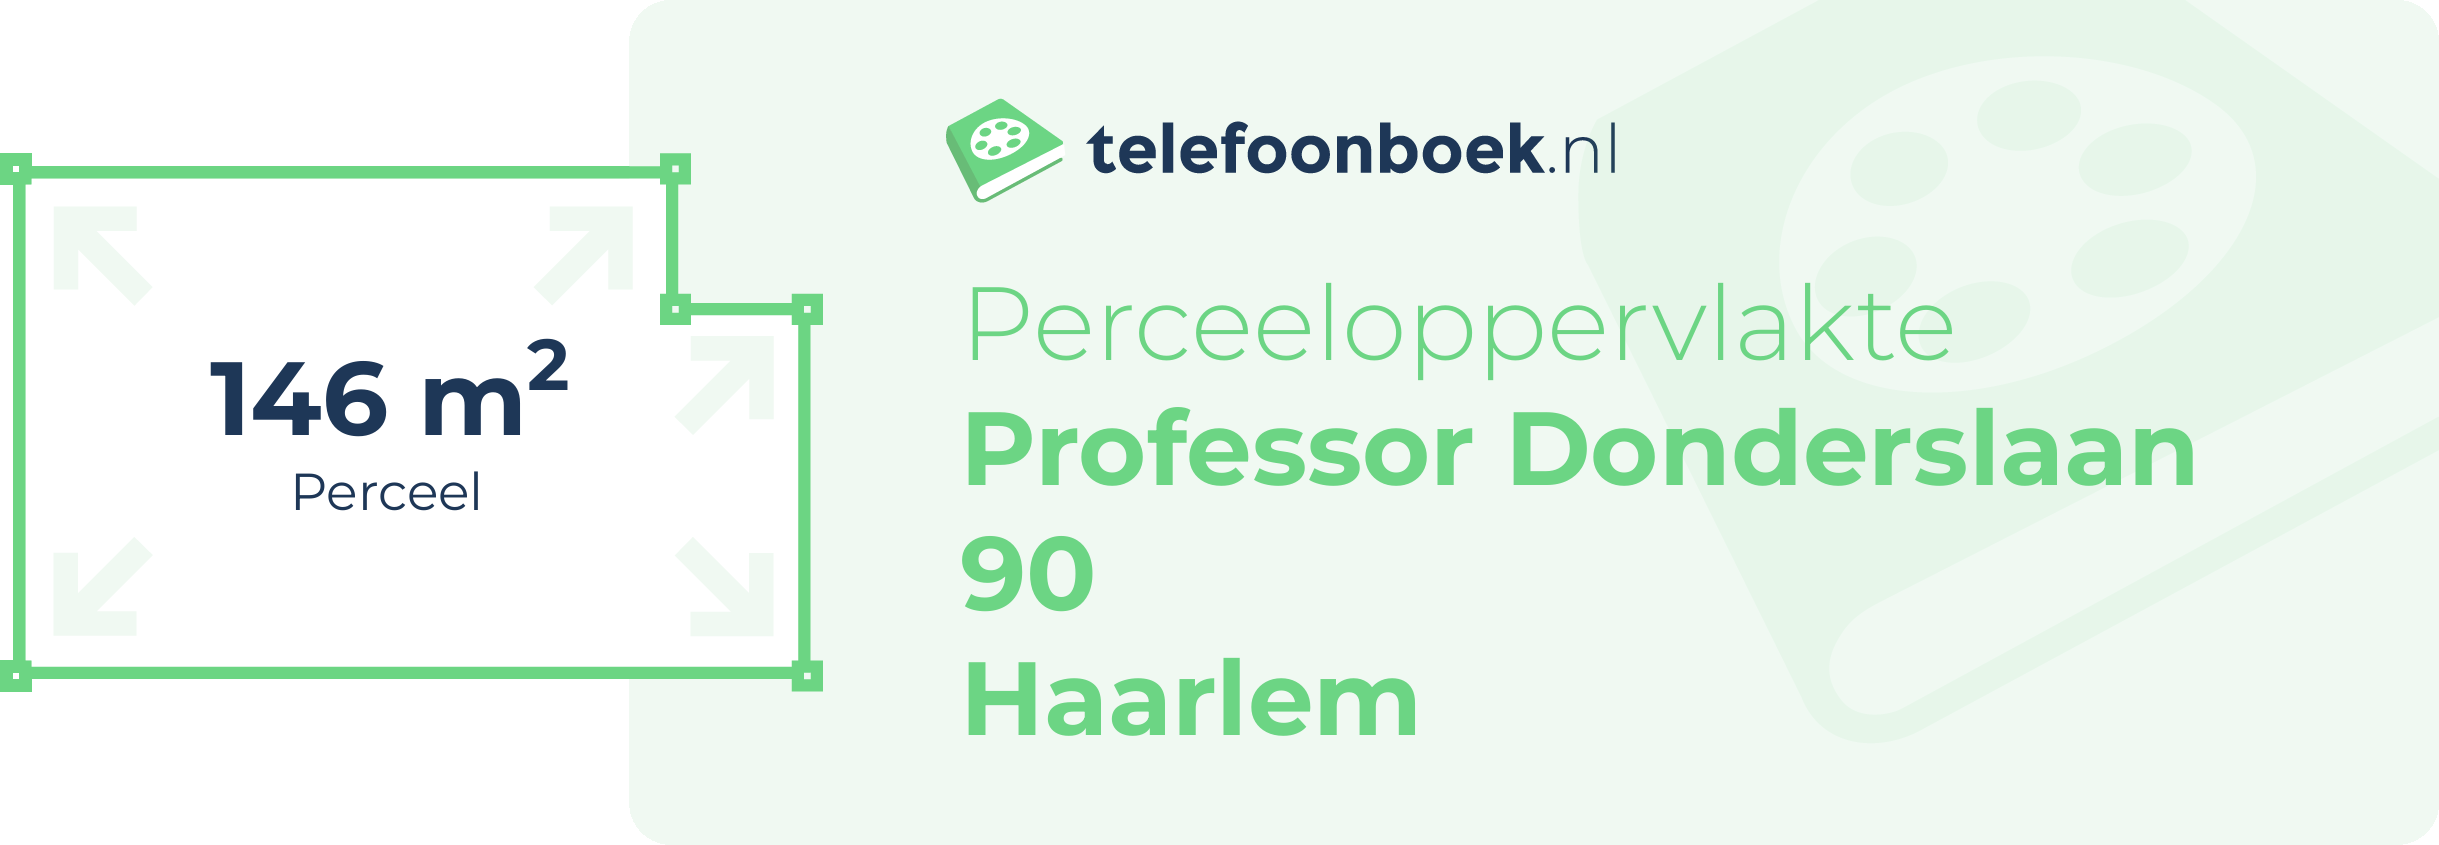 Perceeloppervlakte Professor Donderslaan 90 Haarlem